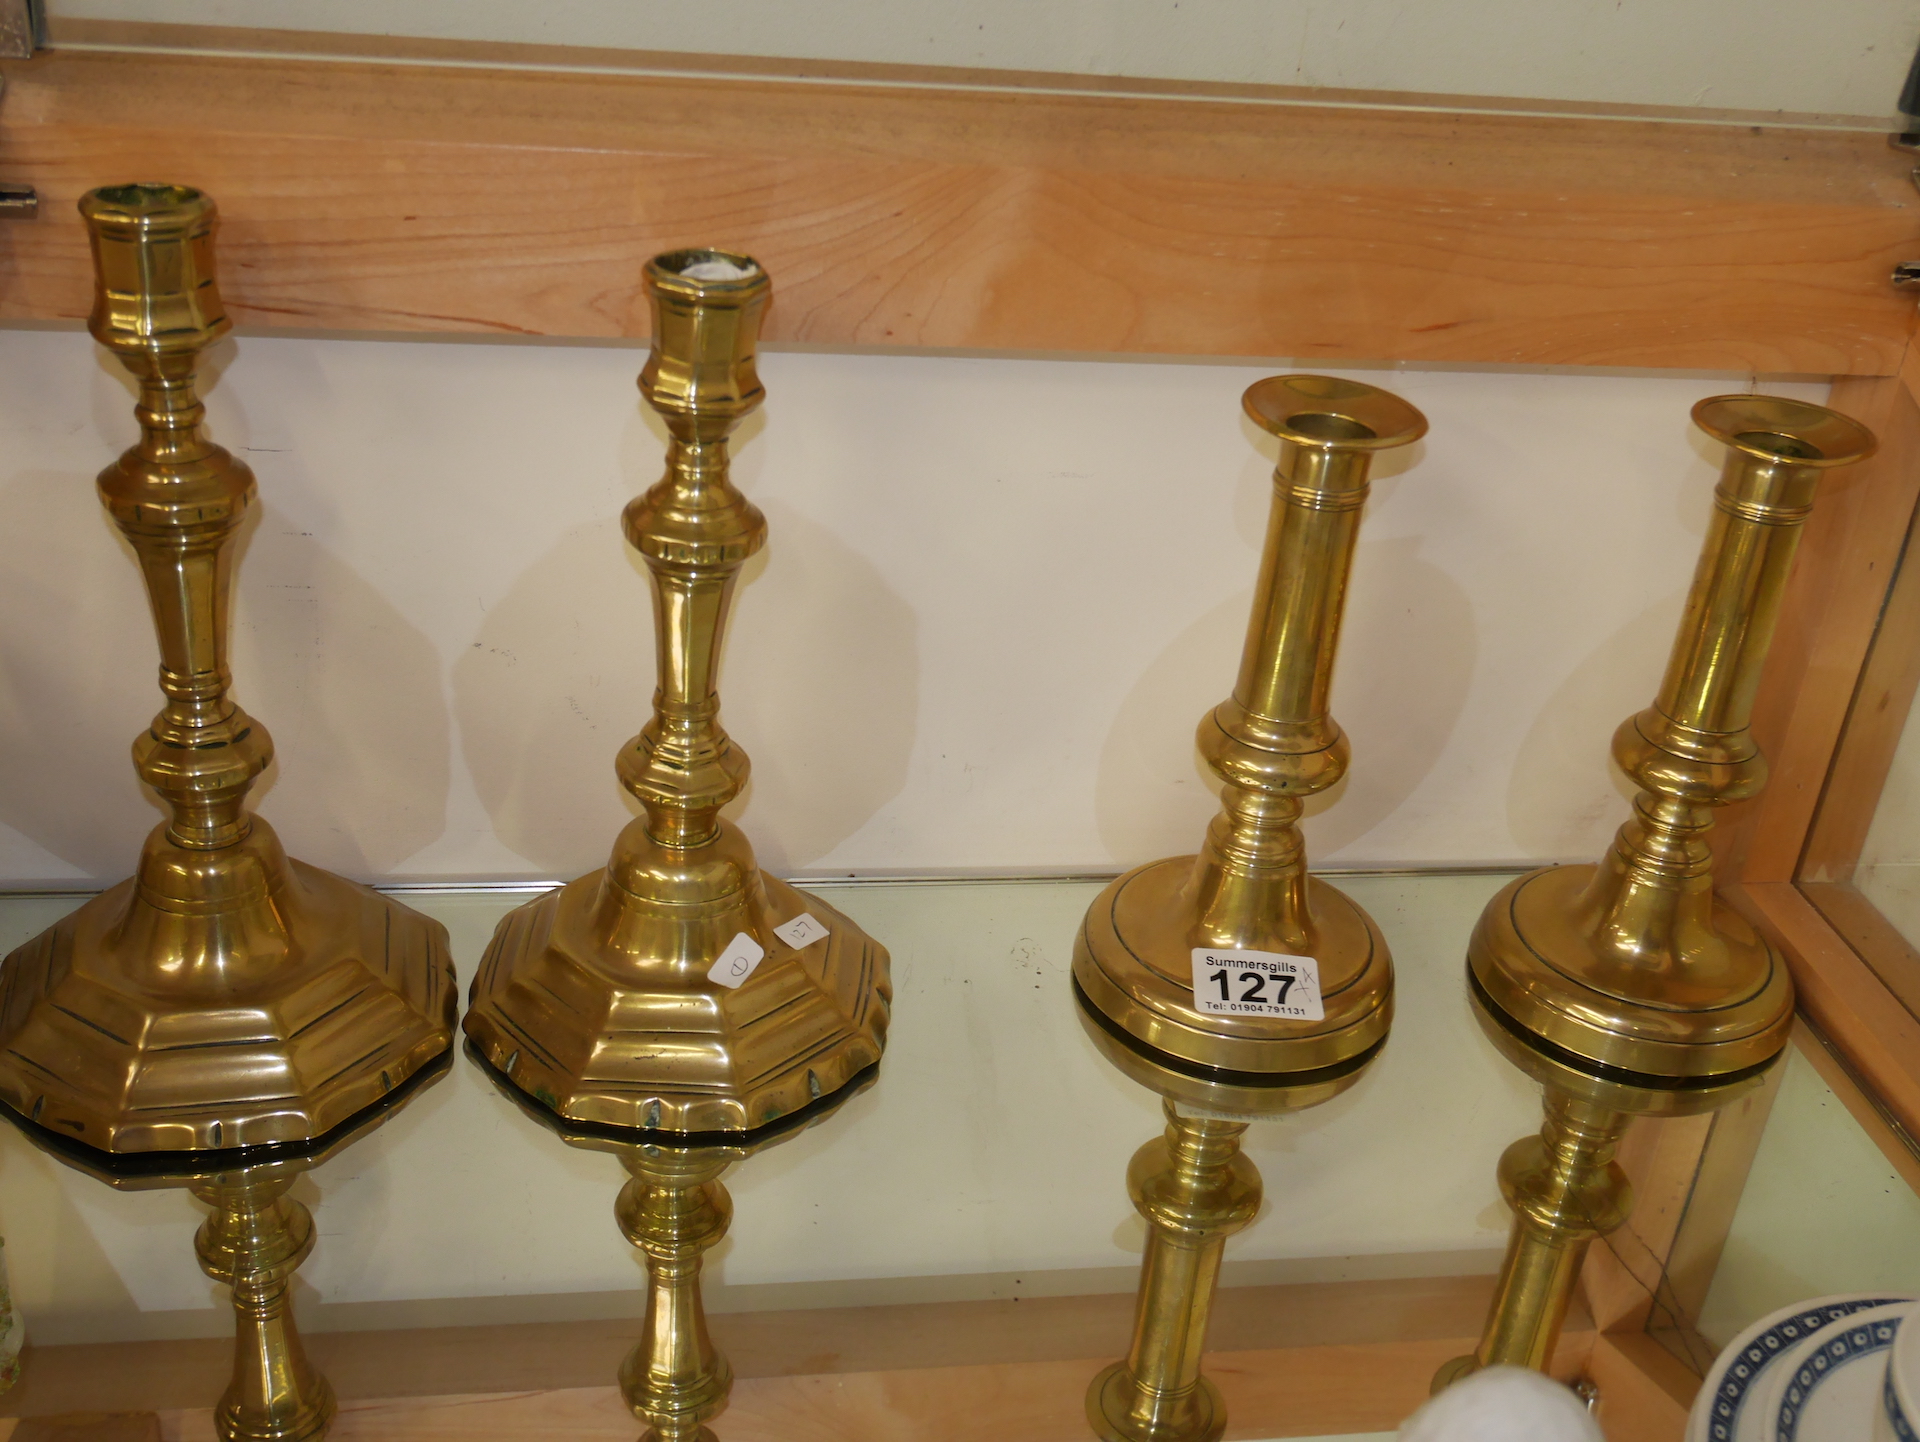 2 pairs of antique candlesticks